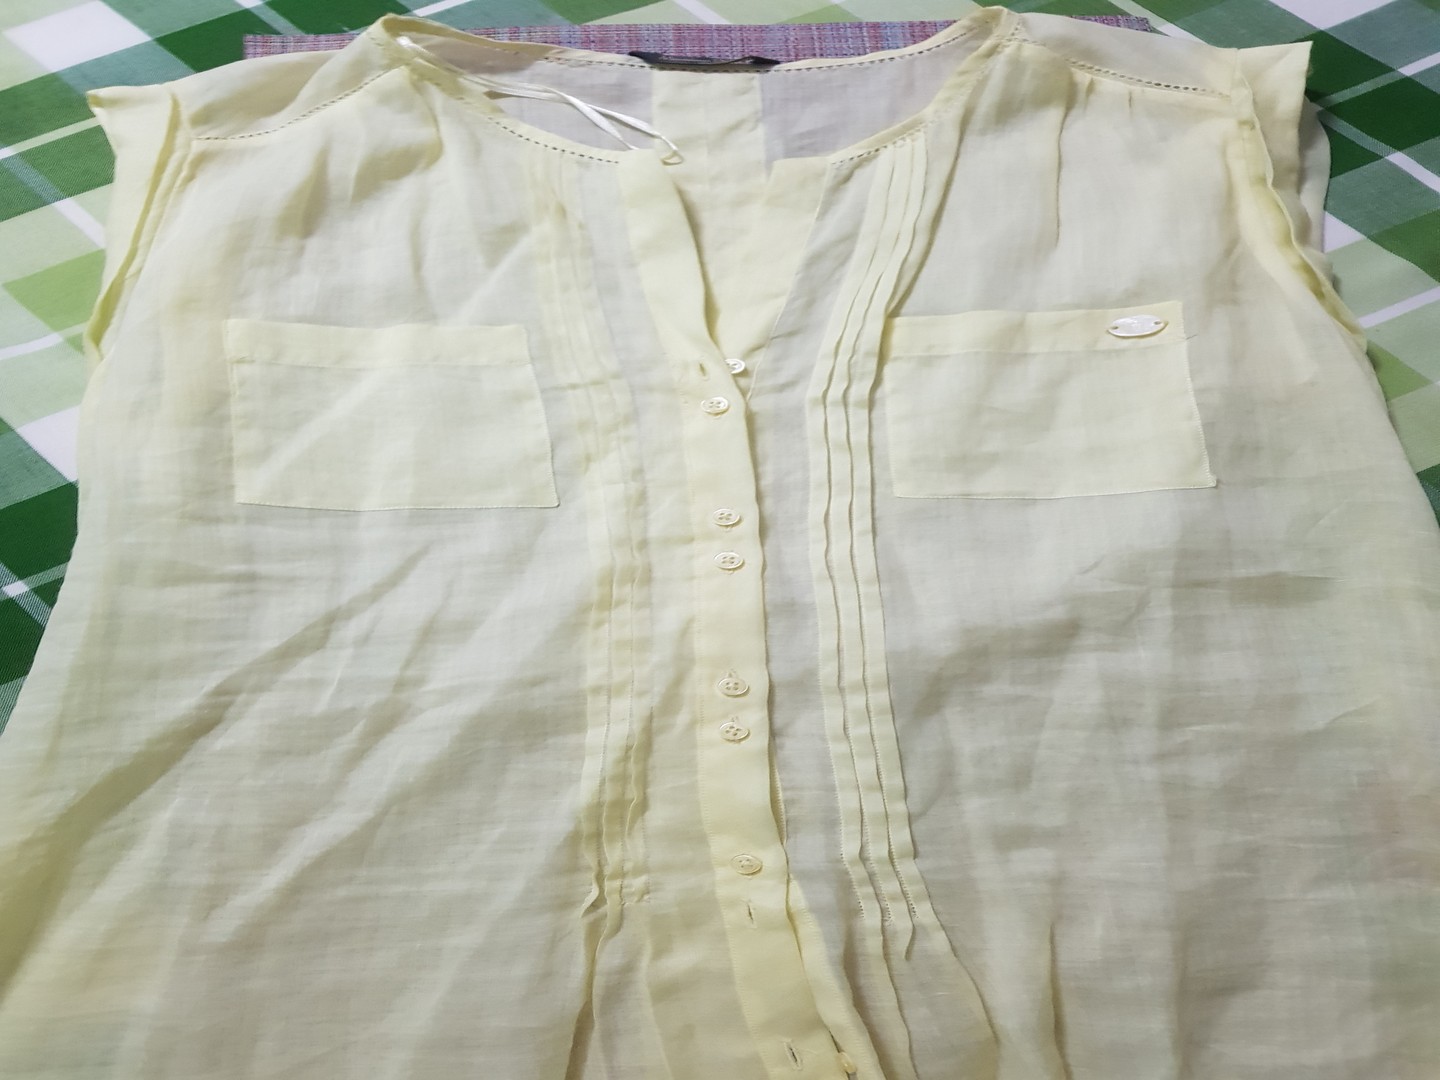 ropa para mujer - Delicada blusa sin mangas, color amarillo tierno, Massimo Dutti de España.